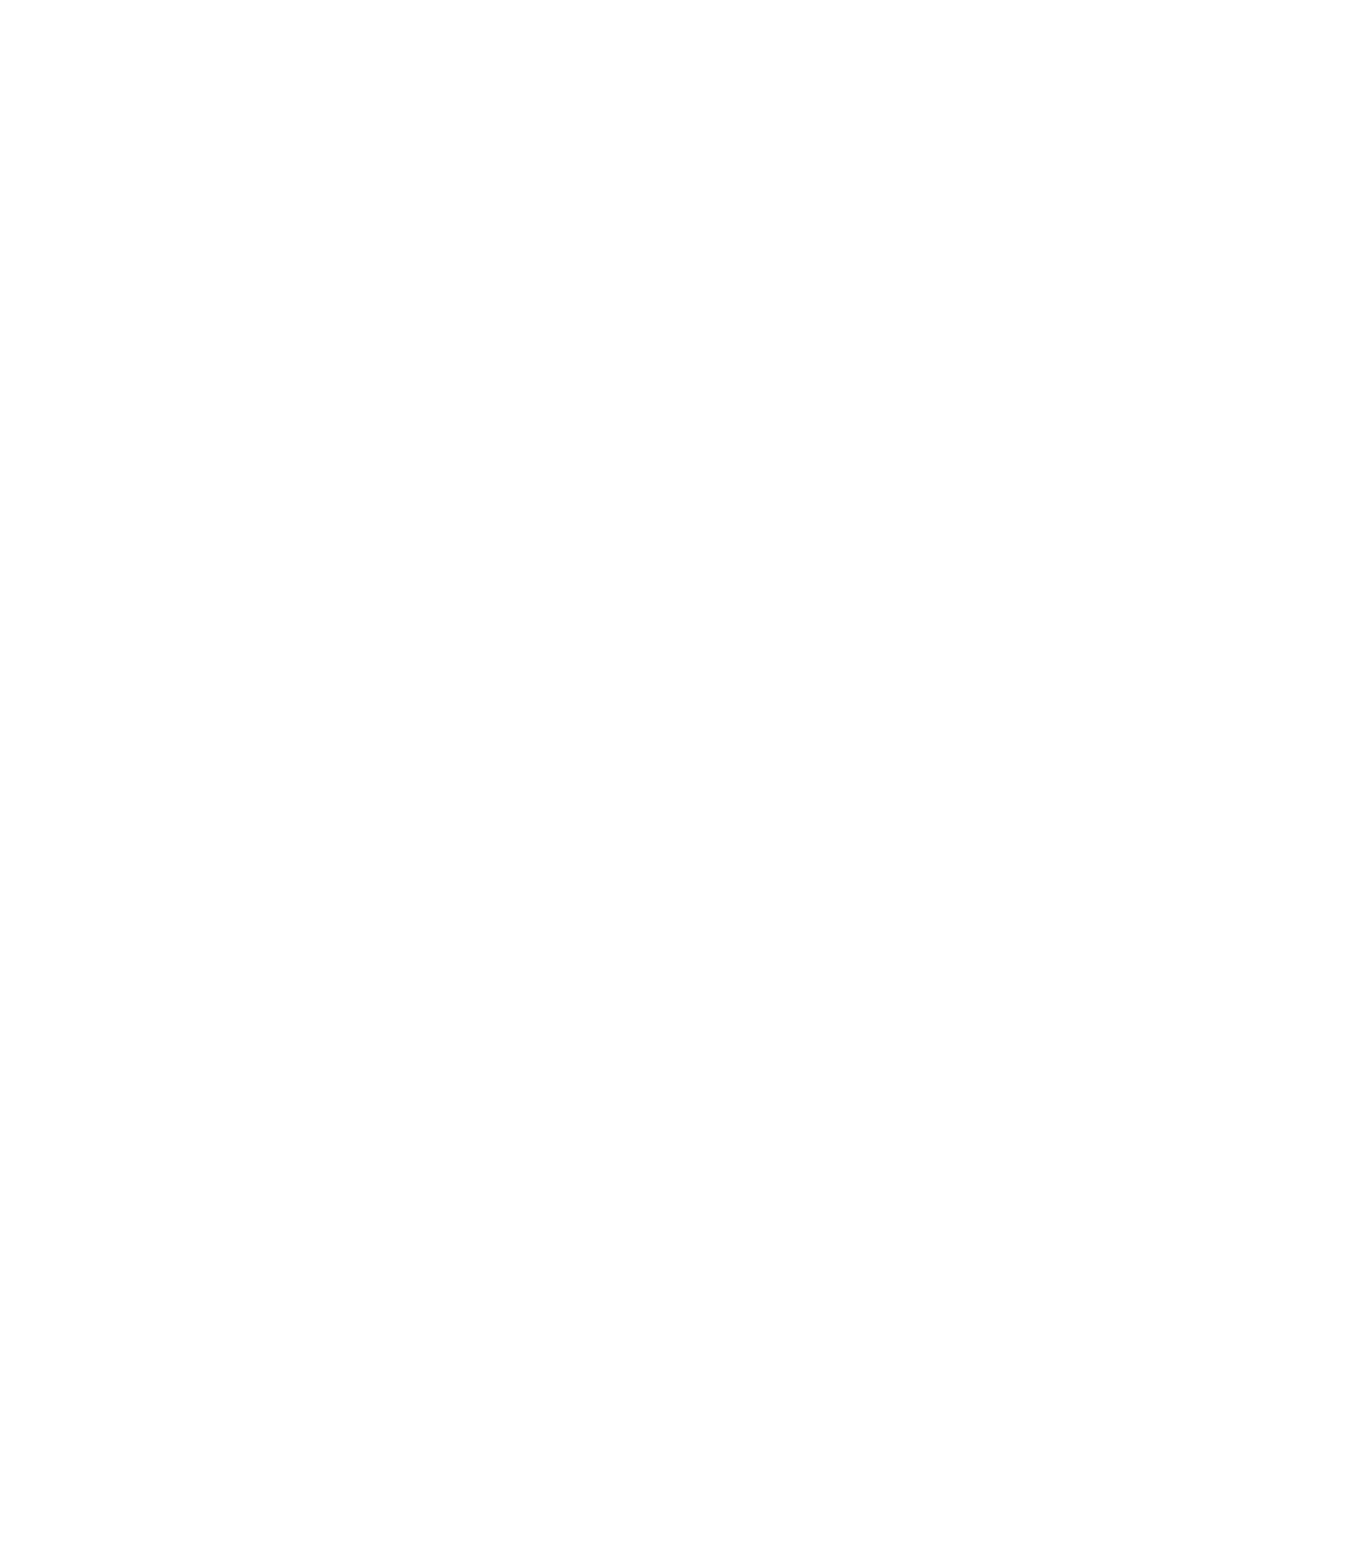 Lexeo Therapeutics logo for dark backgrounds (transparent PNG)